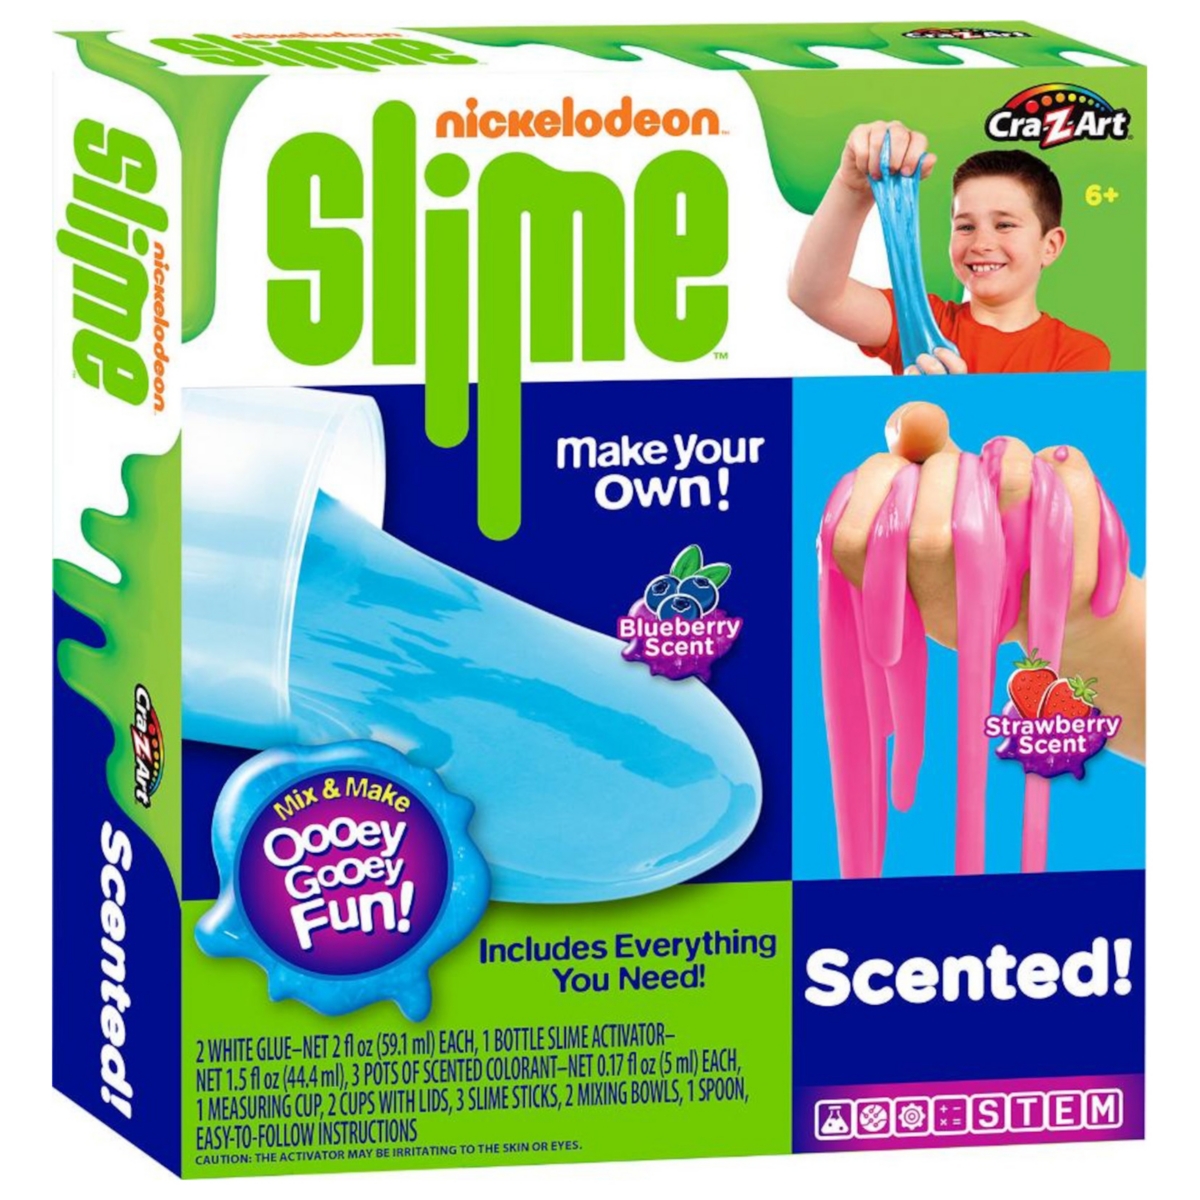 UPC 884920188273 product image for Cra Z Art Cra Z Slime Nickleodeon Make Your Own Scented Slime Kit | upcitemdb.com